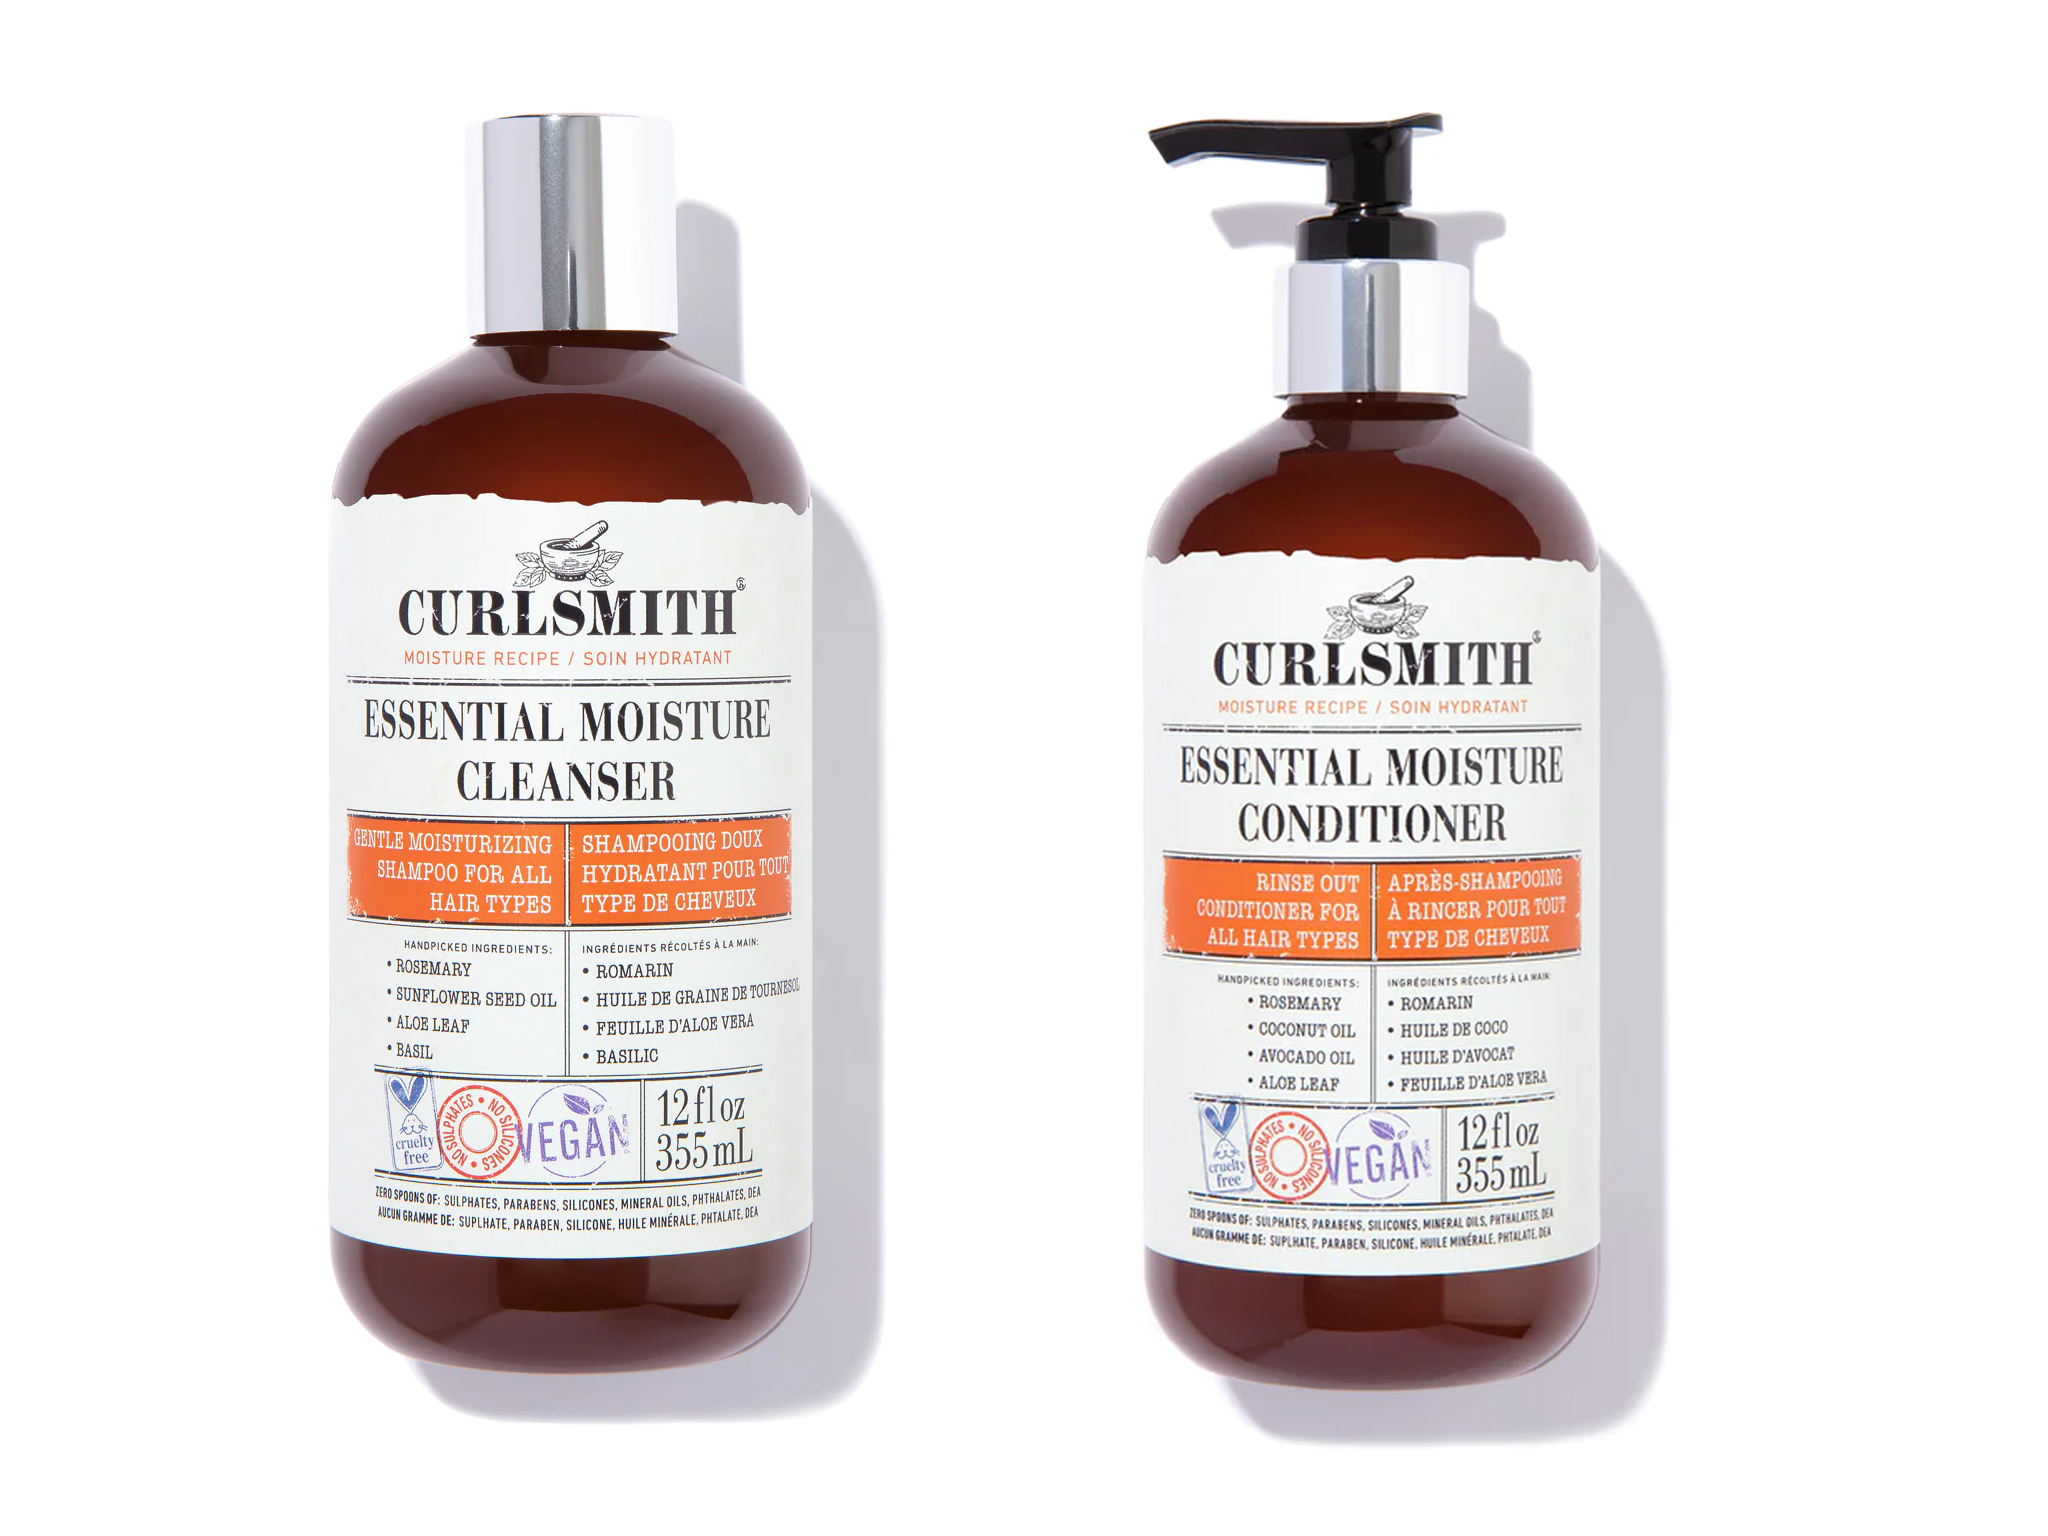 Curlsmith essential moisture cleanser and conditioner